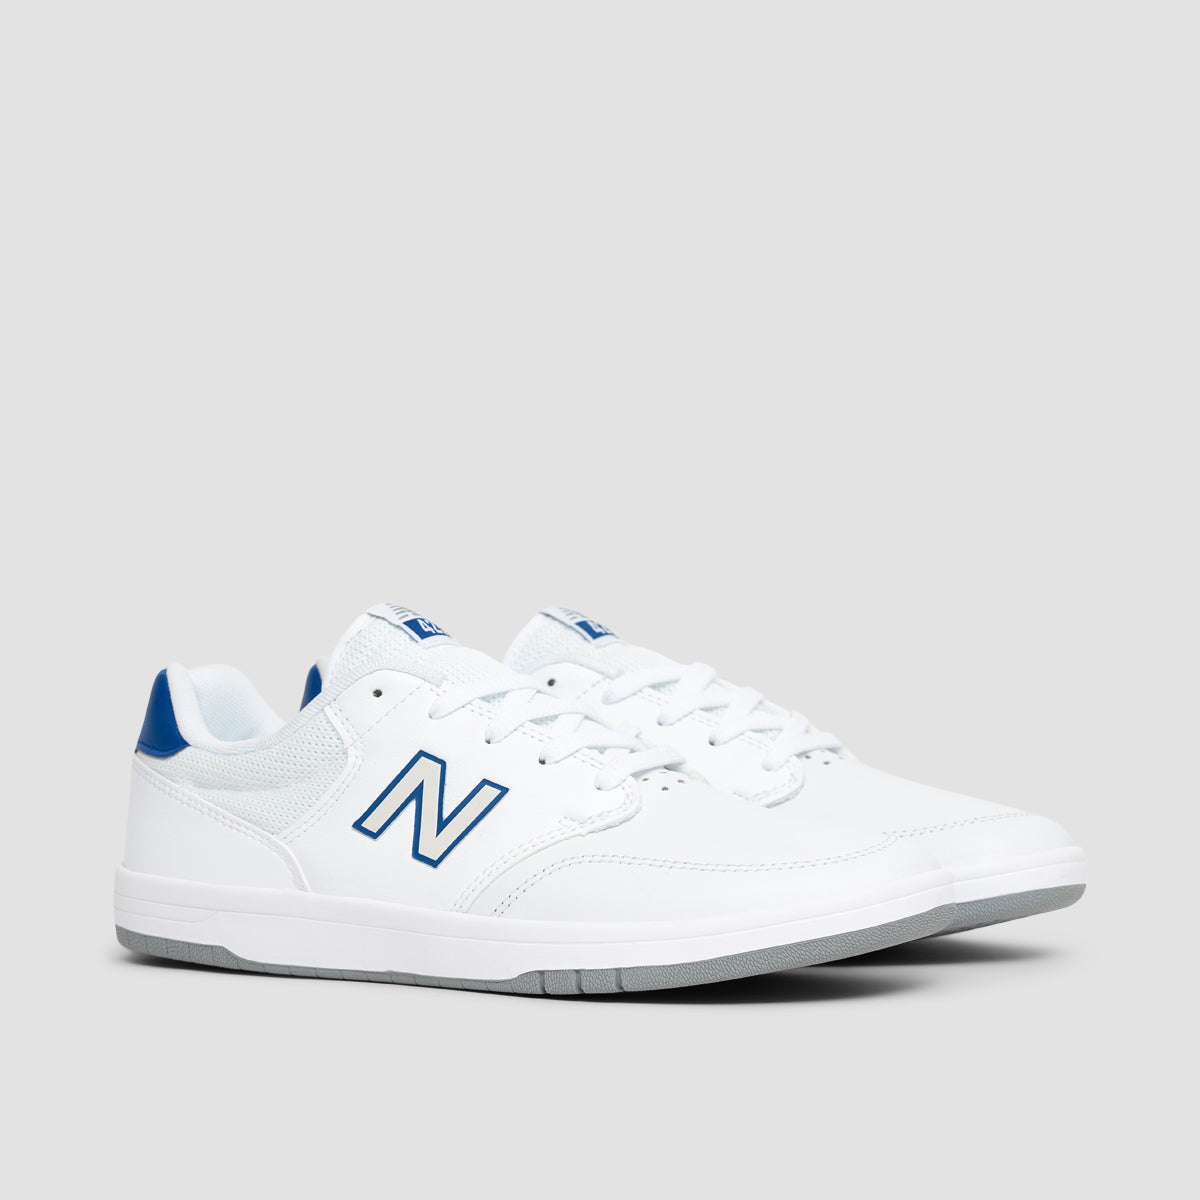 New Balance Numeric 425 Shoes - White/Royal